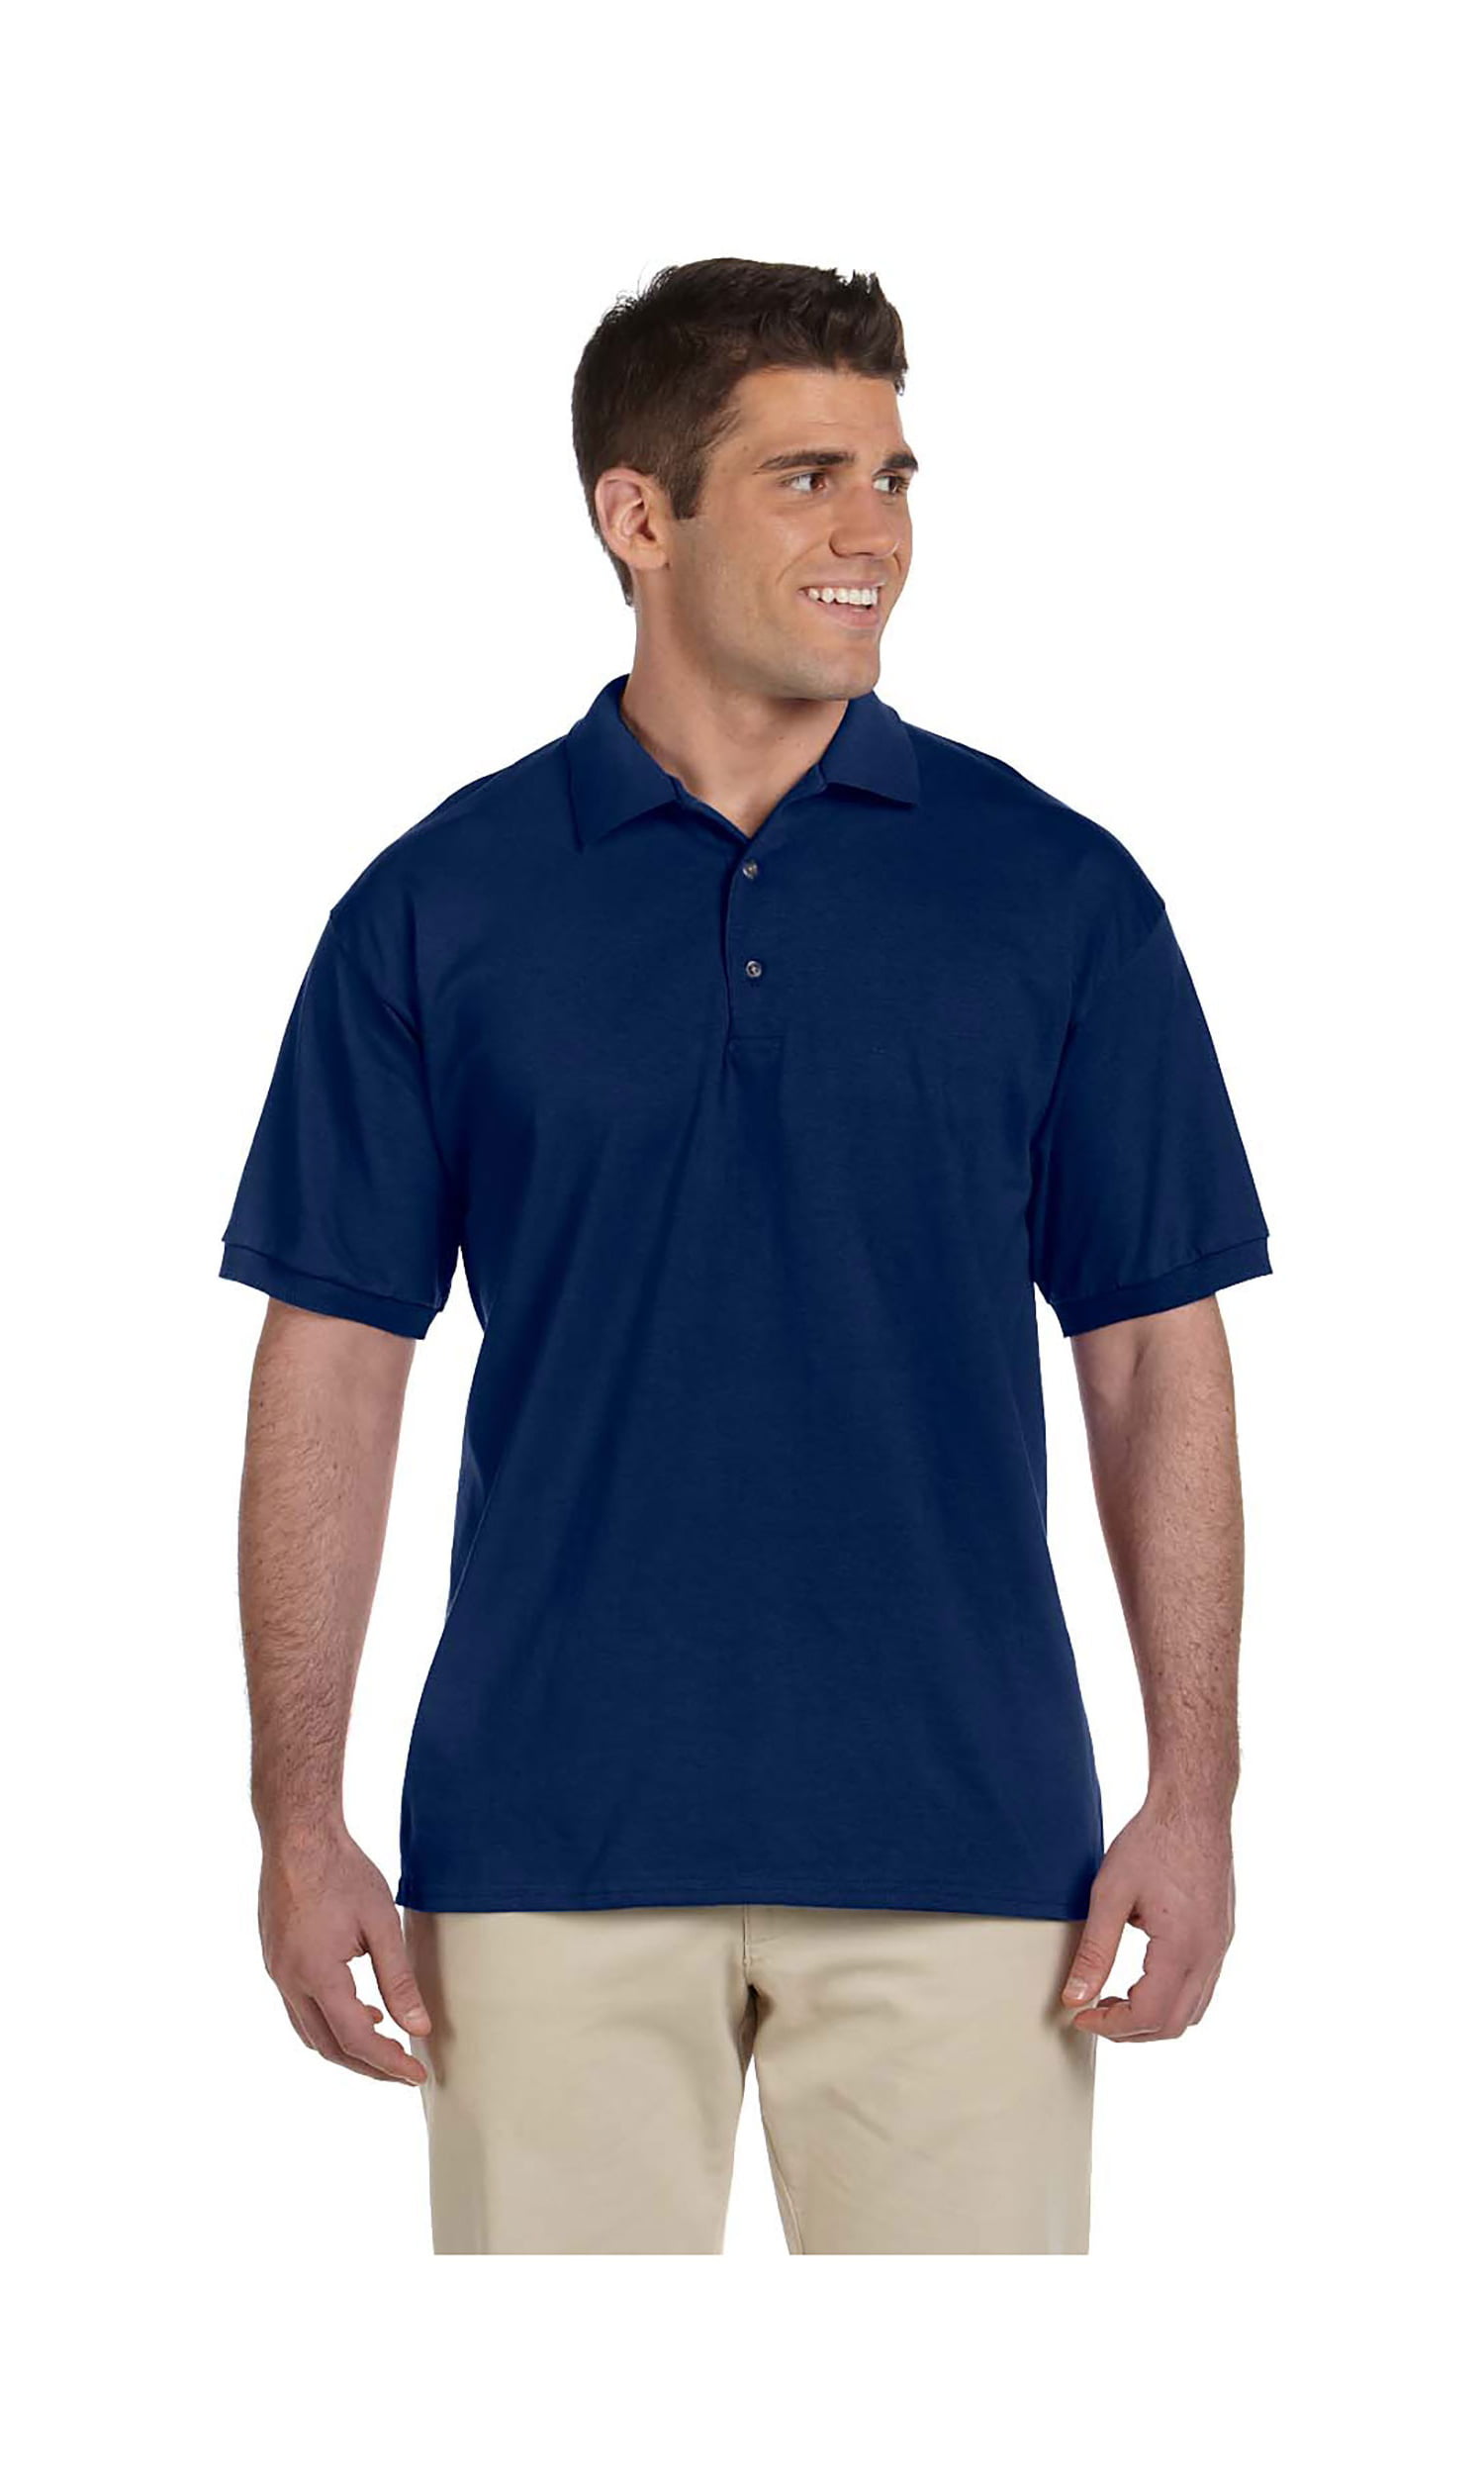 Gildan Mens Double-Needle Jersey Polo Sport Shirt 